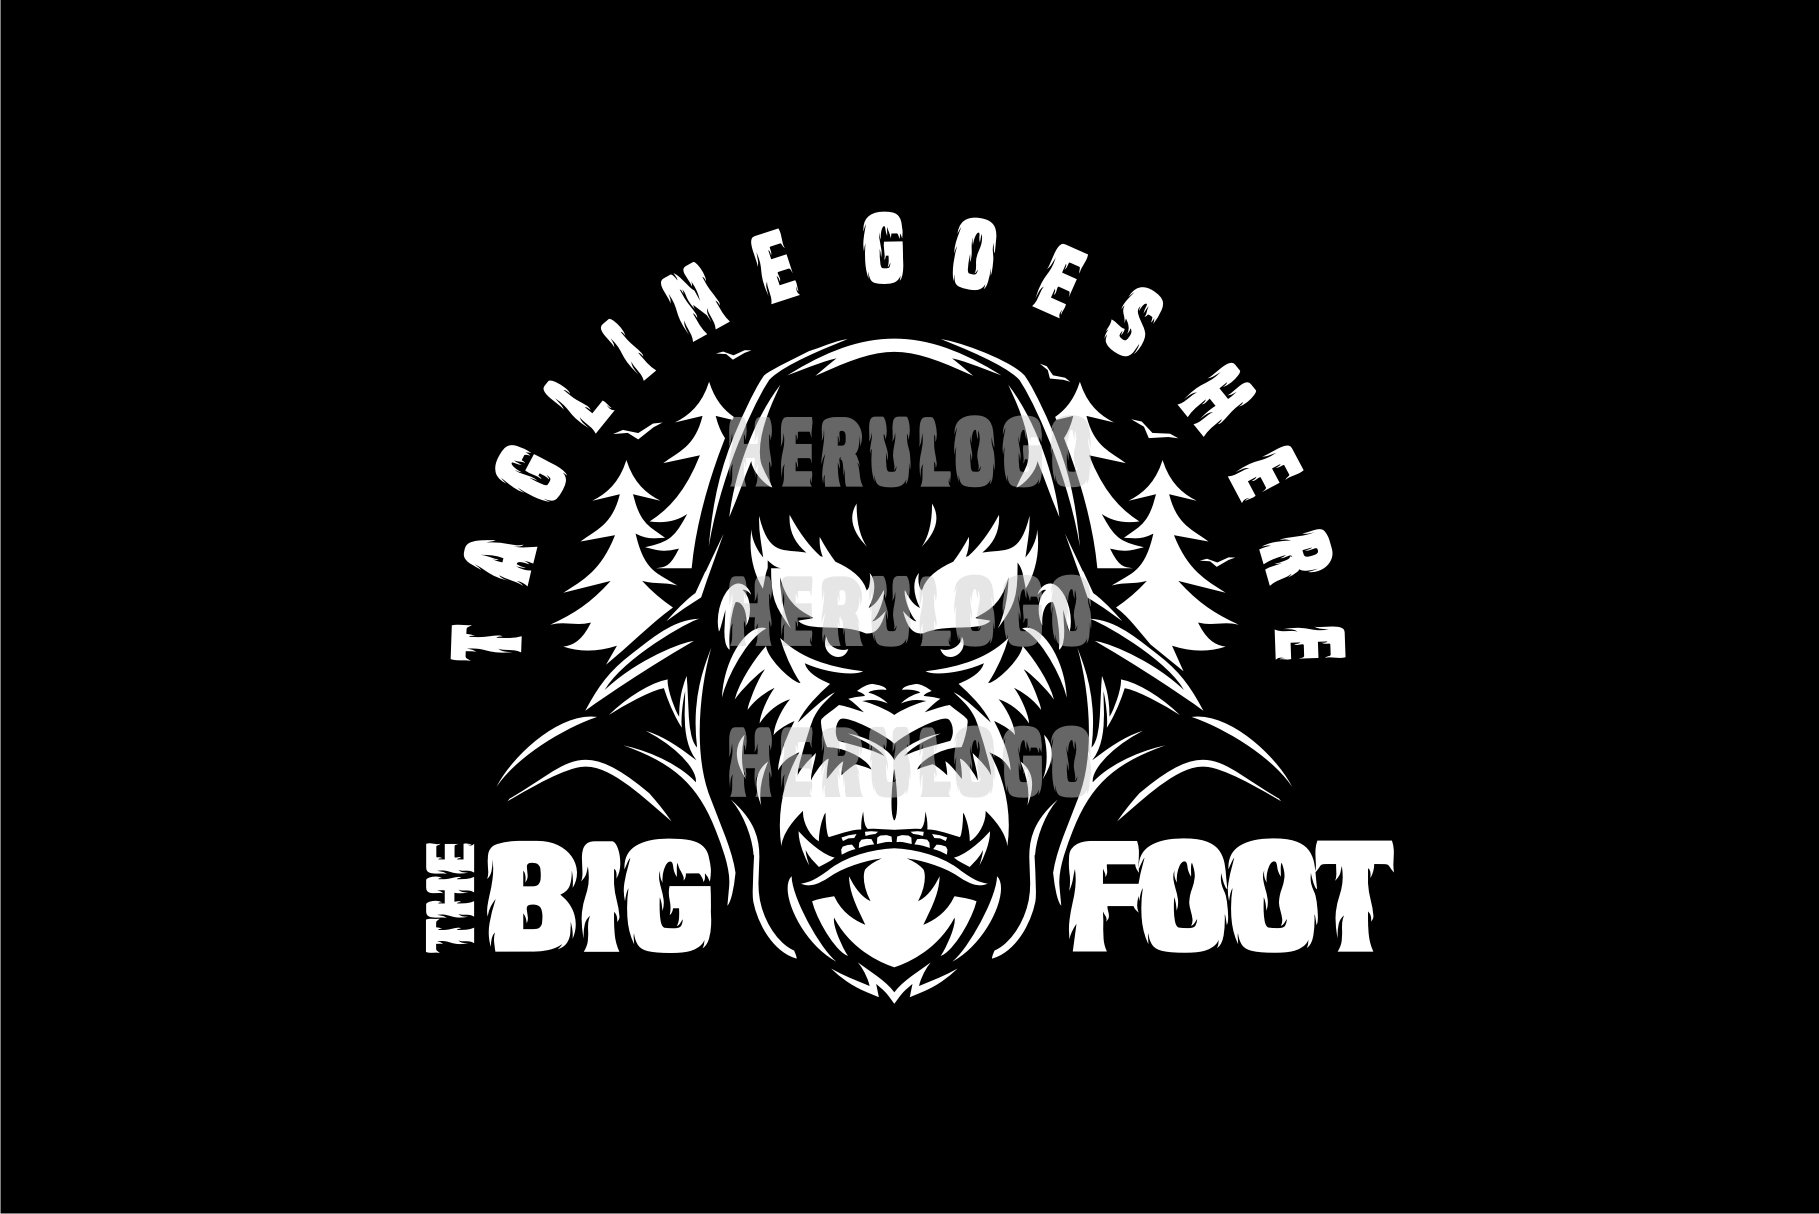 Bigfoot Head preview image.